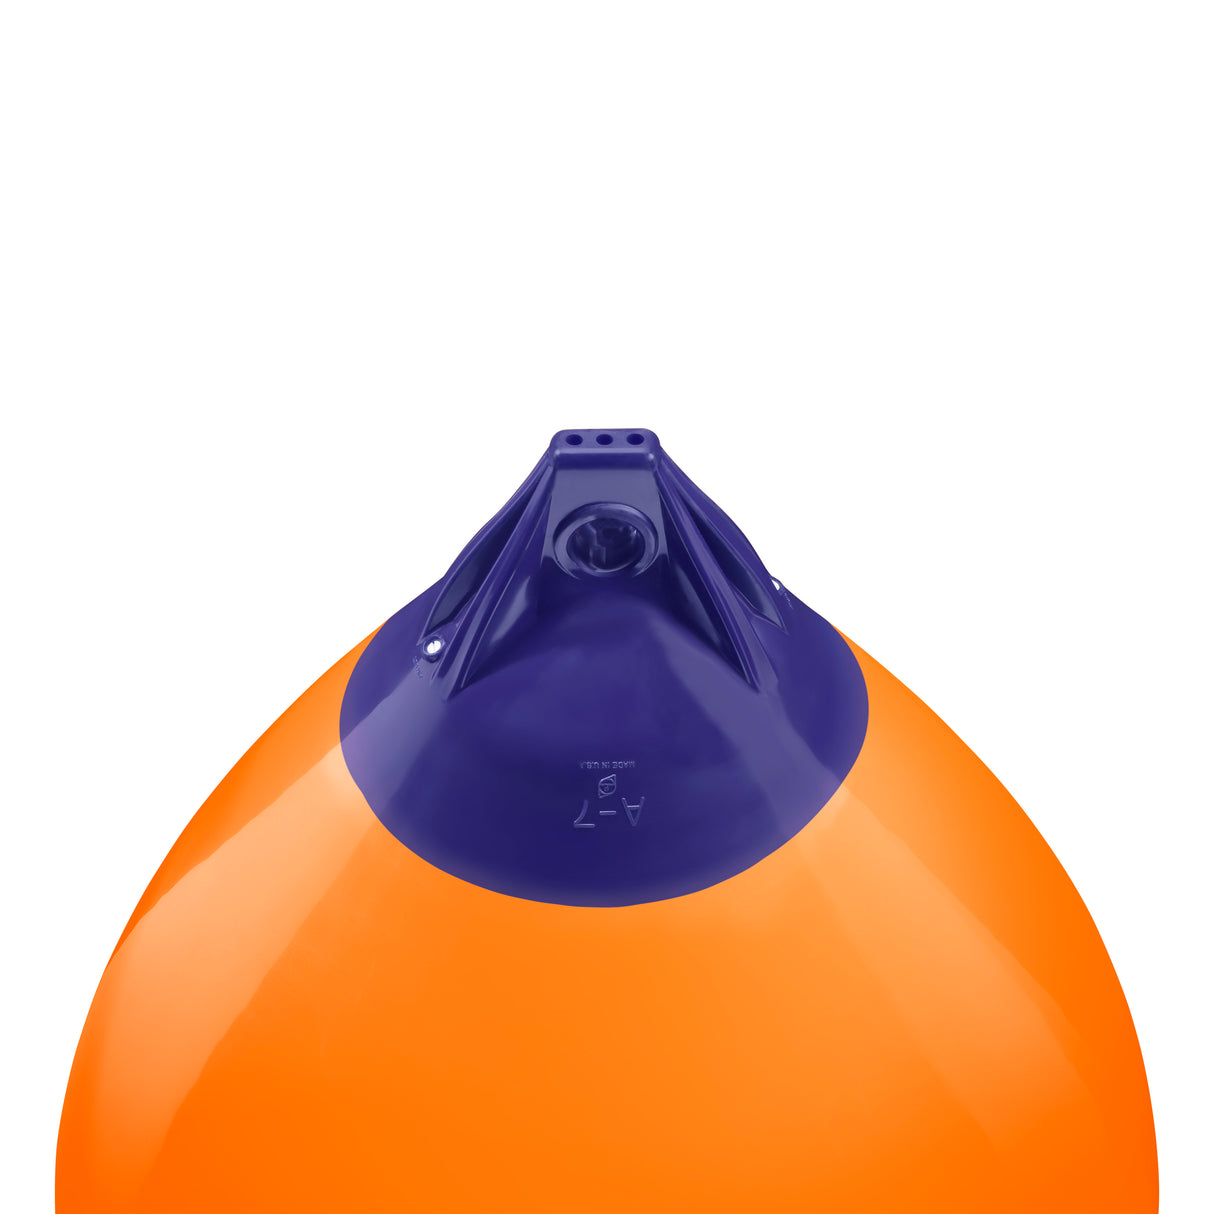 Orange inflatable buoy, Polyform A-7 angled shot